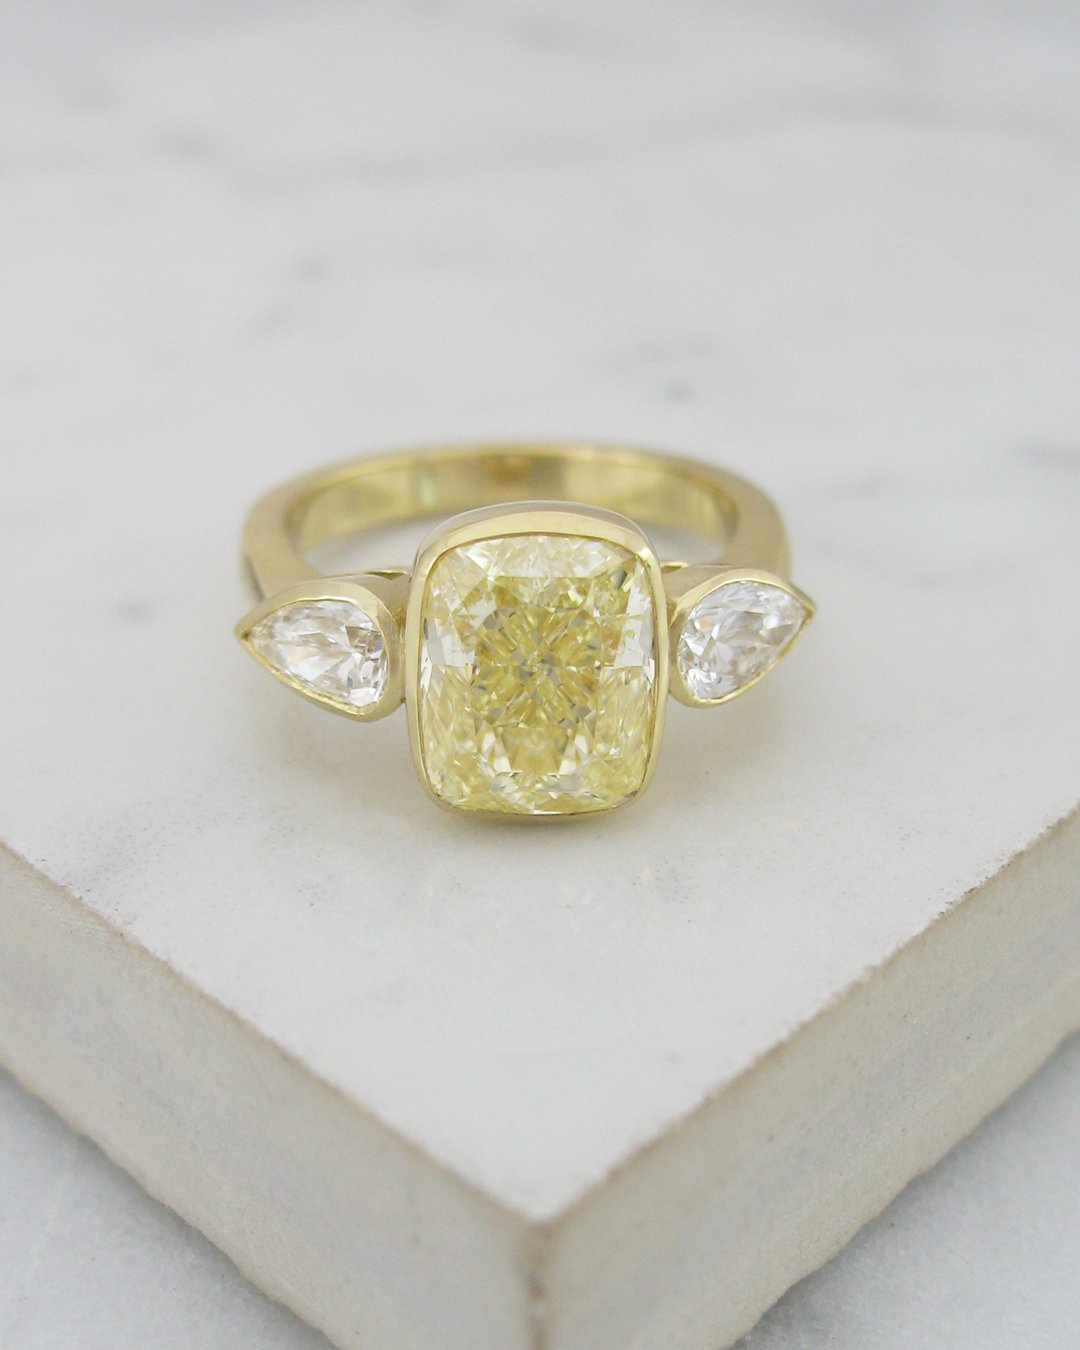 Vibrant yellow cushion cut diamond engagement ring